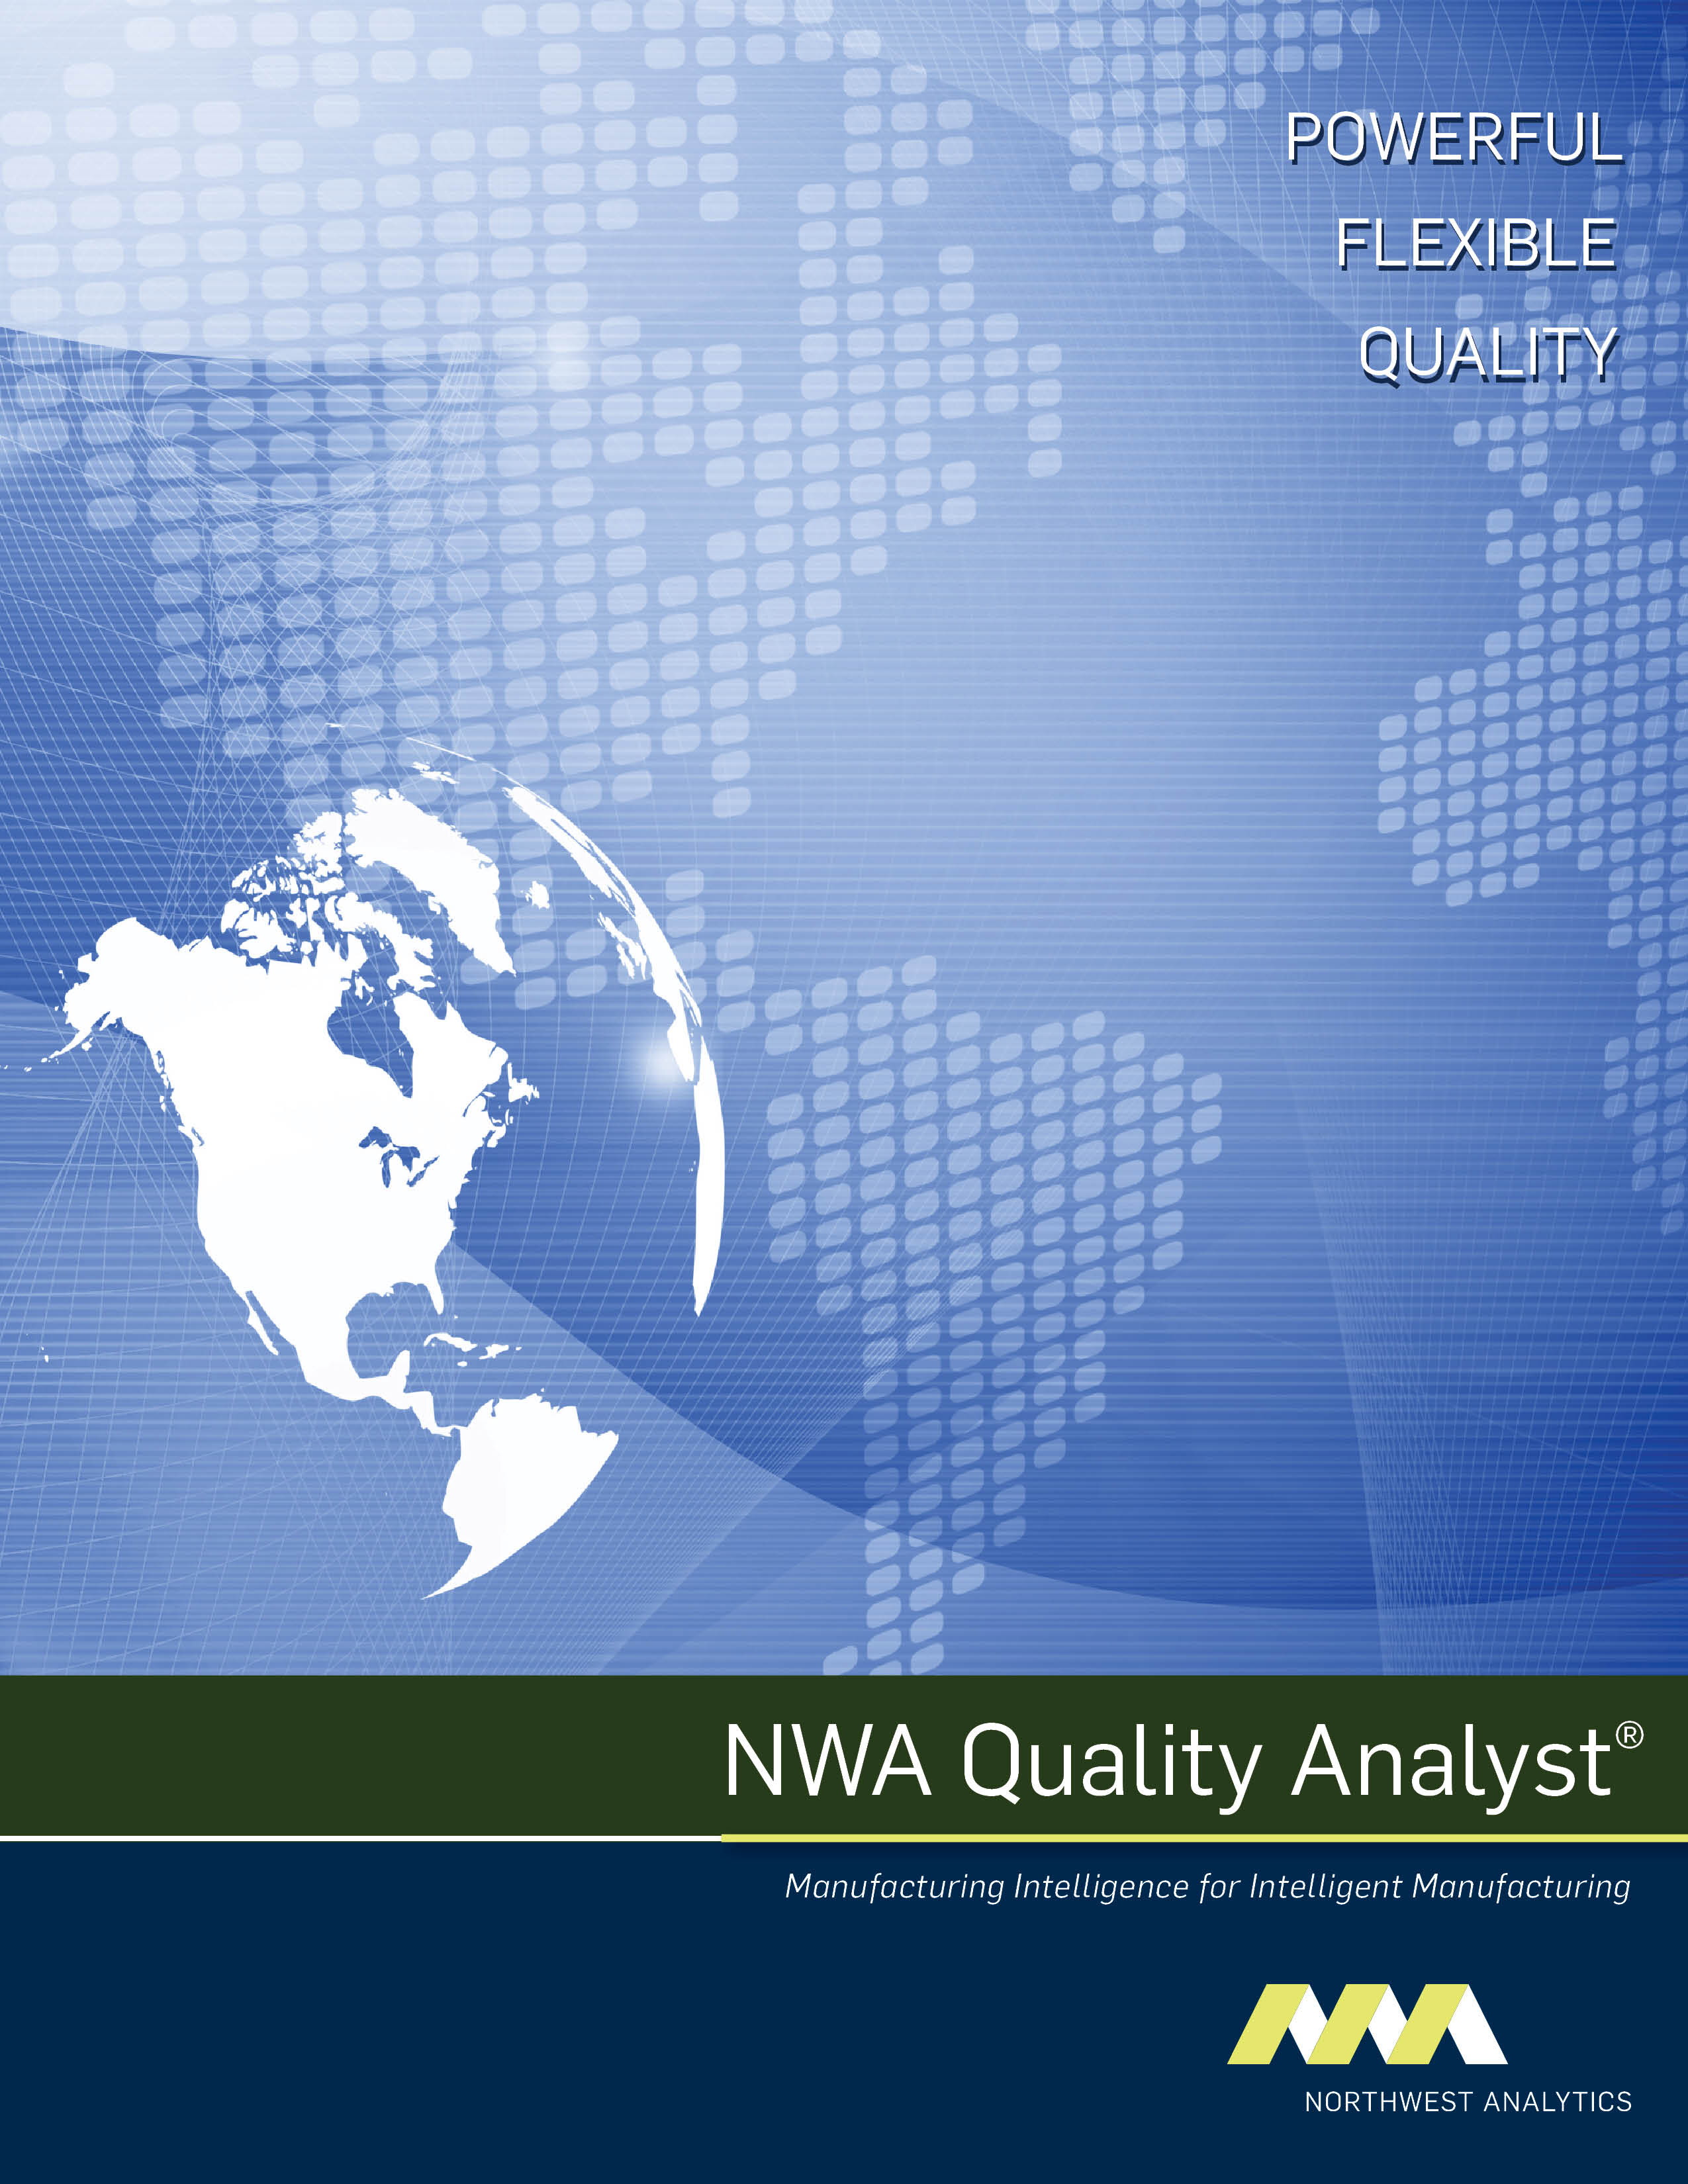 nwa quality analyst 6.2